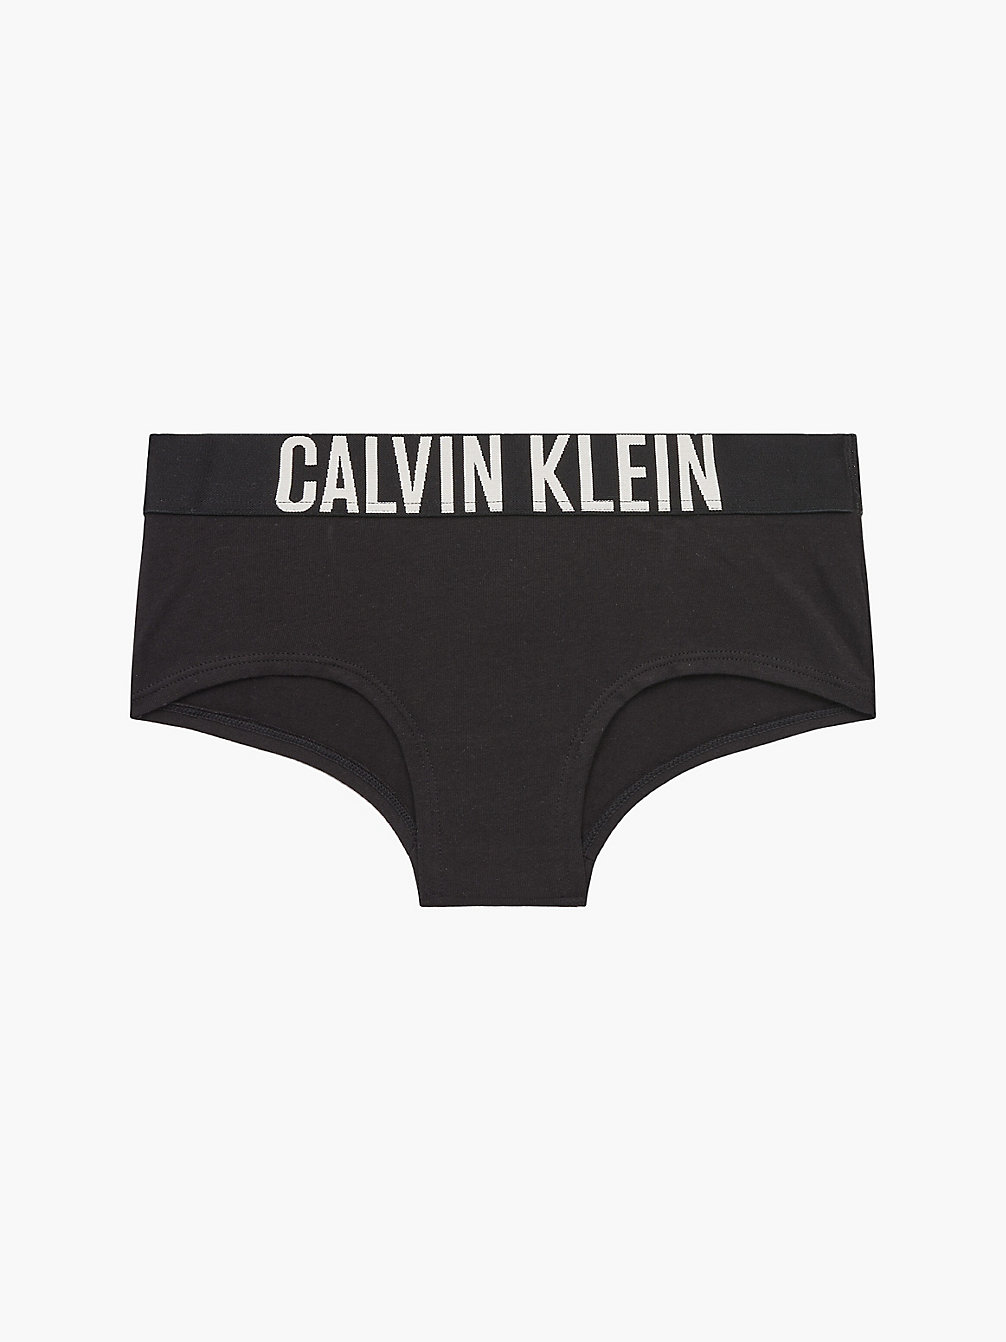 PVHBLACK/PVHBLACK 2 Pack Girls Hipster Panties - Intense Power undefined girls Calvin Klein